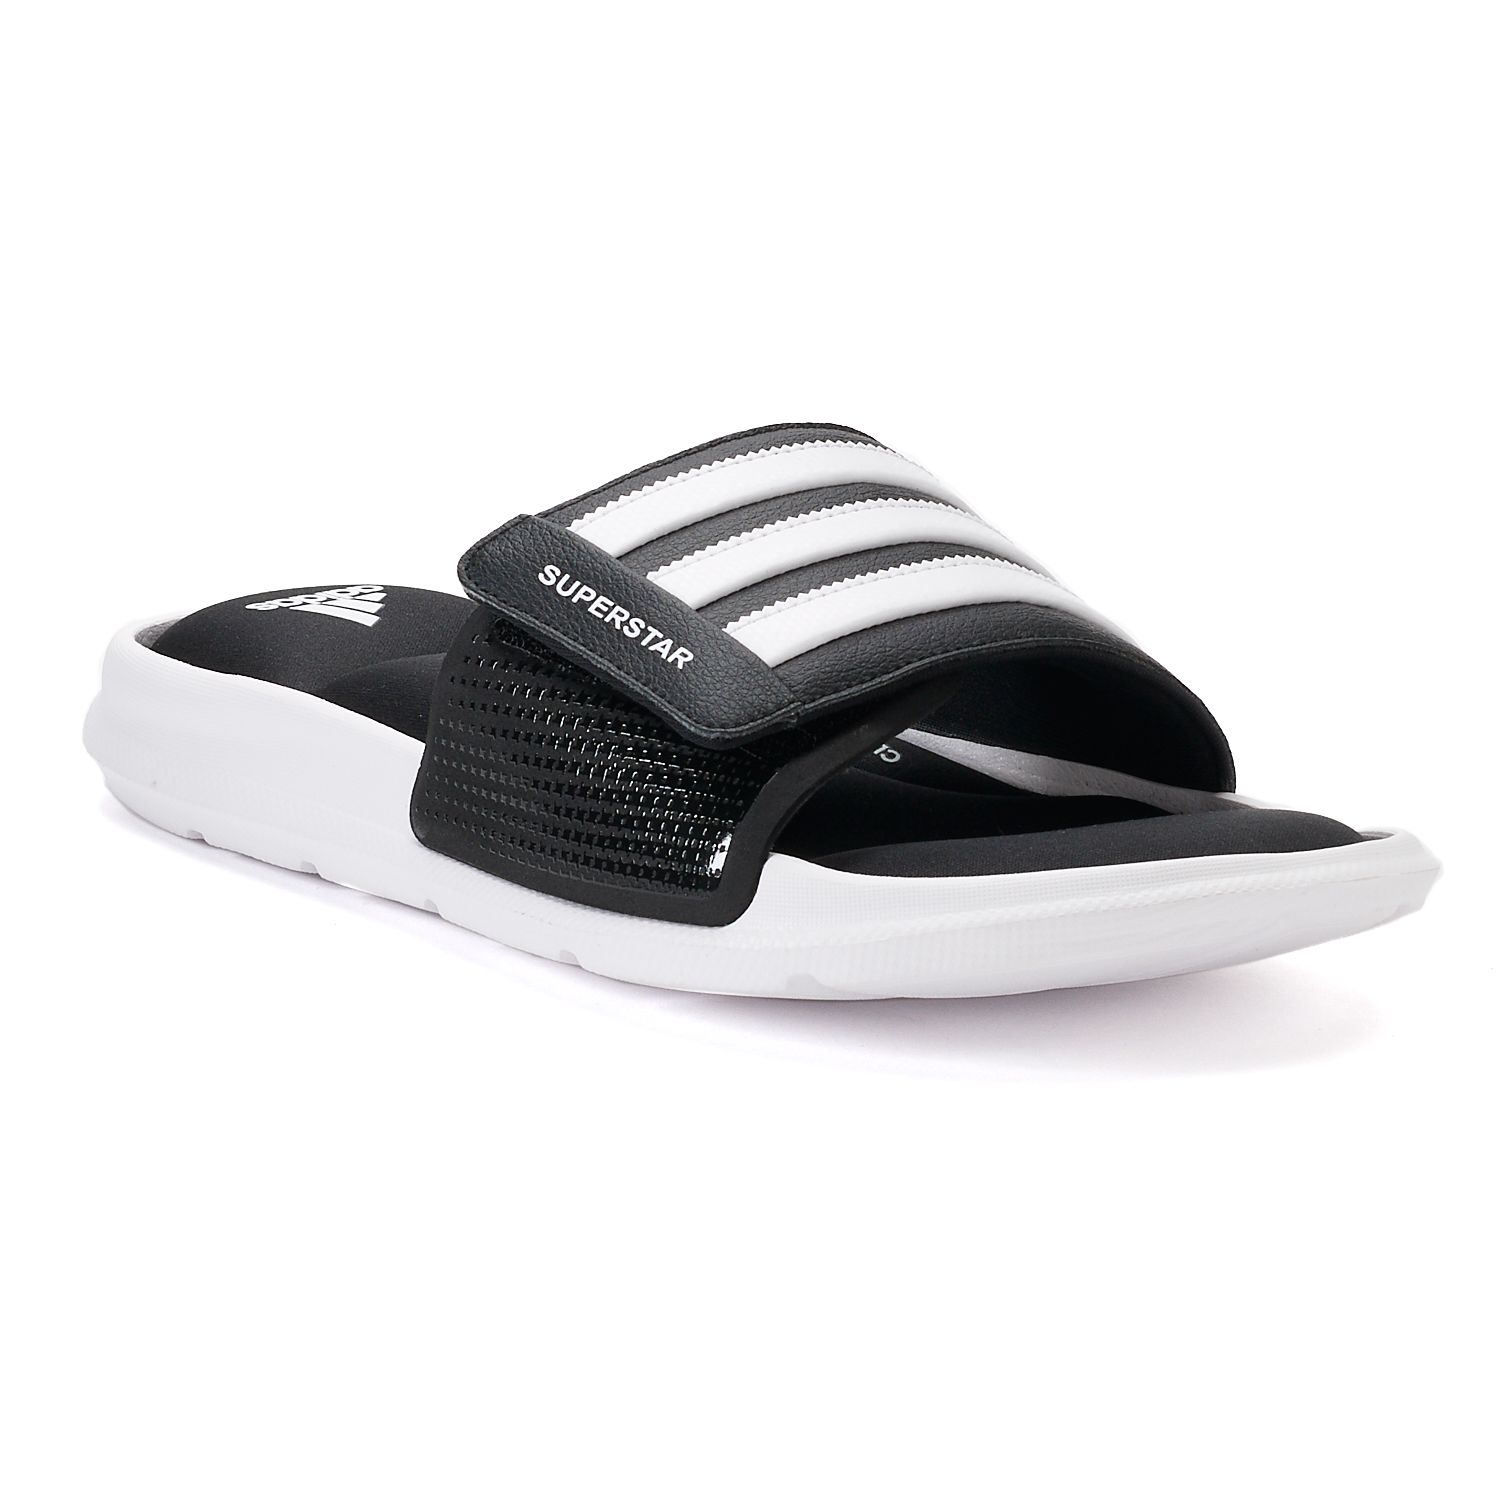 adidas superstar slide sandals